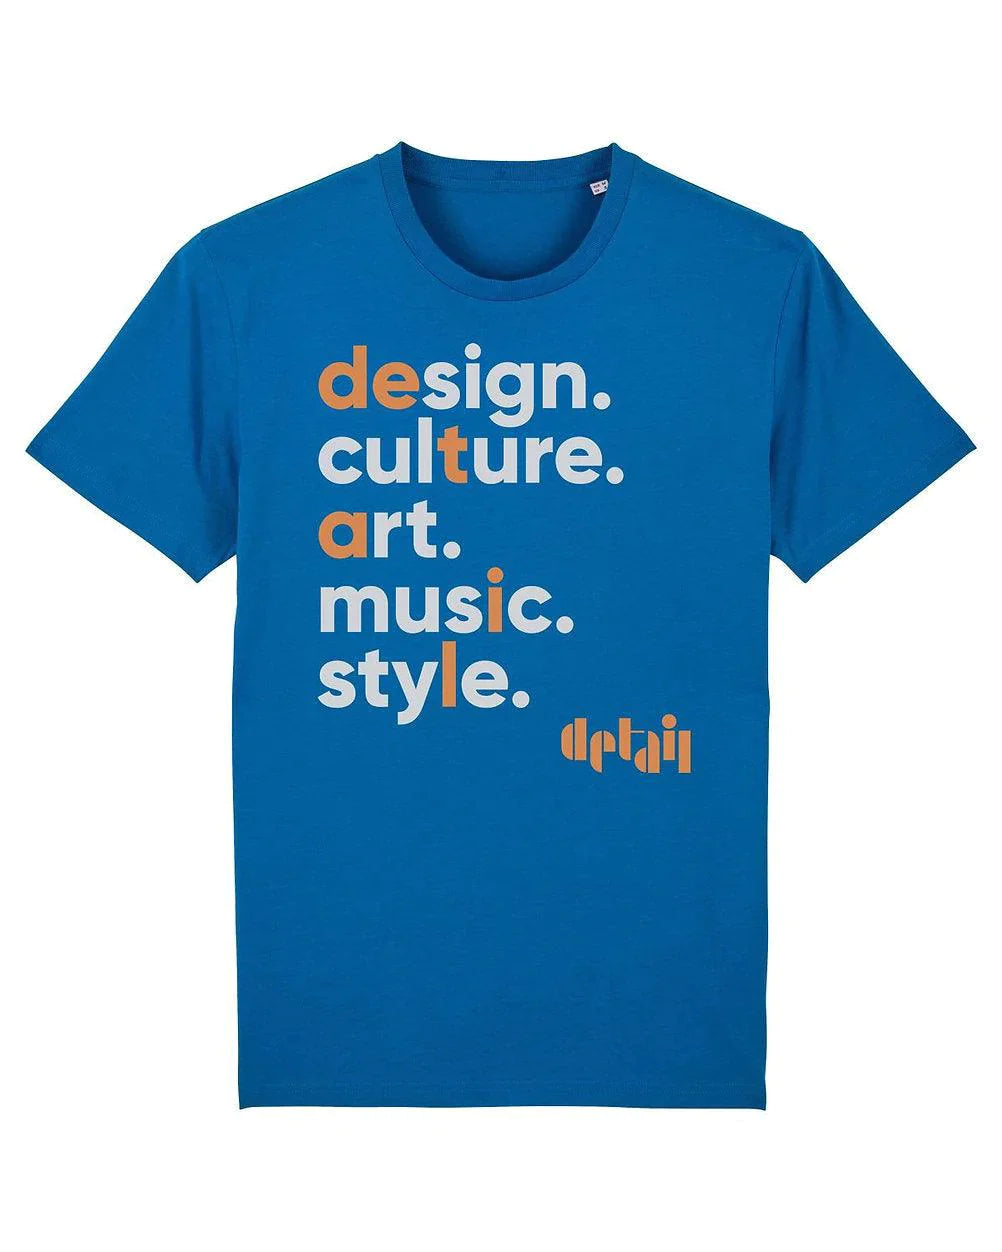 DETAIL: T-Shirt Official Merchandise for Detail magazine - SOUND IS COLOUR